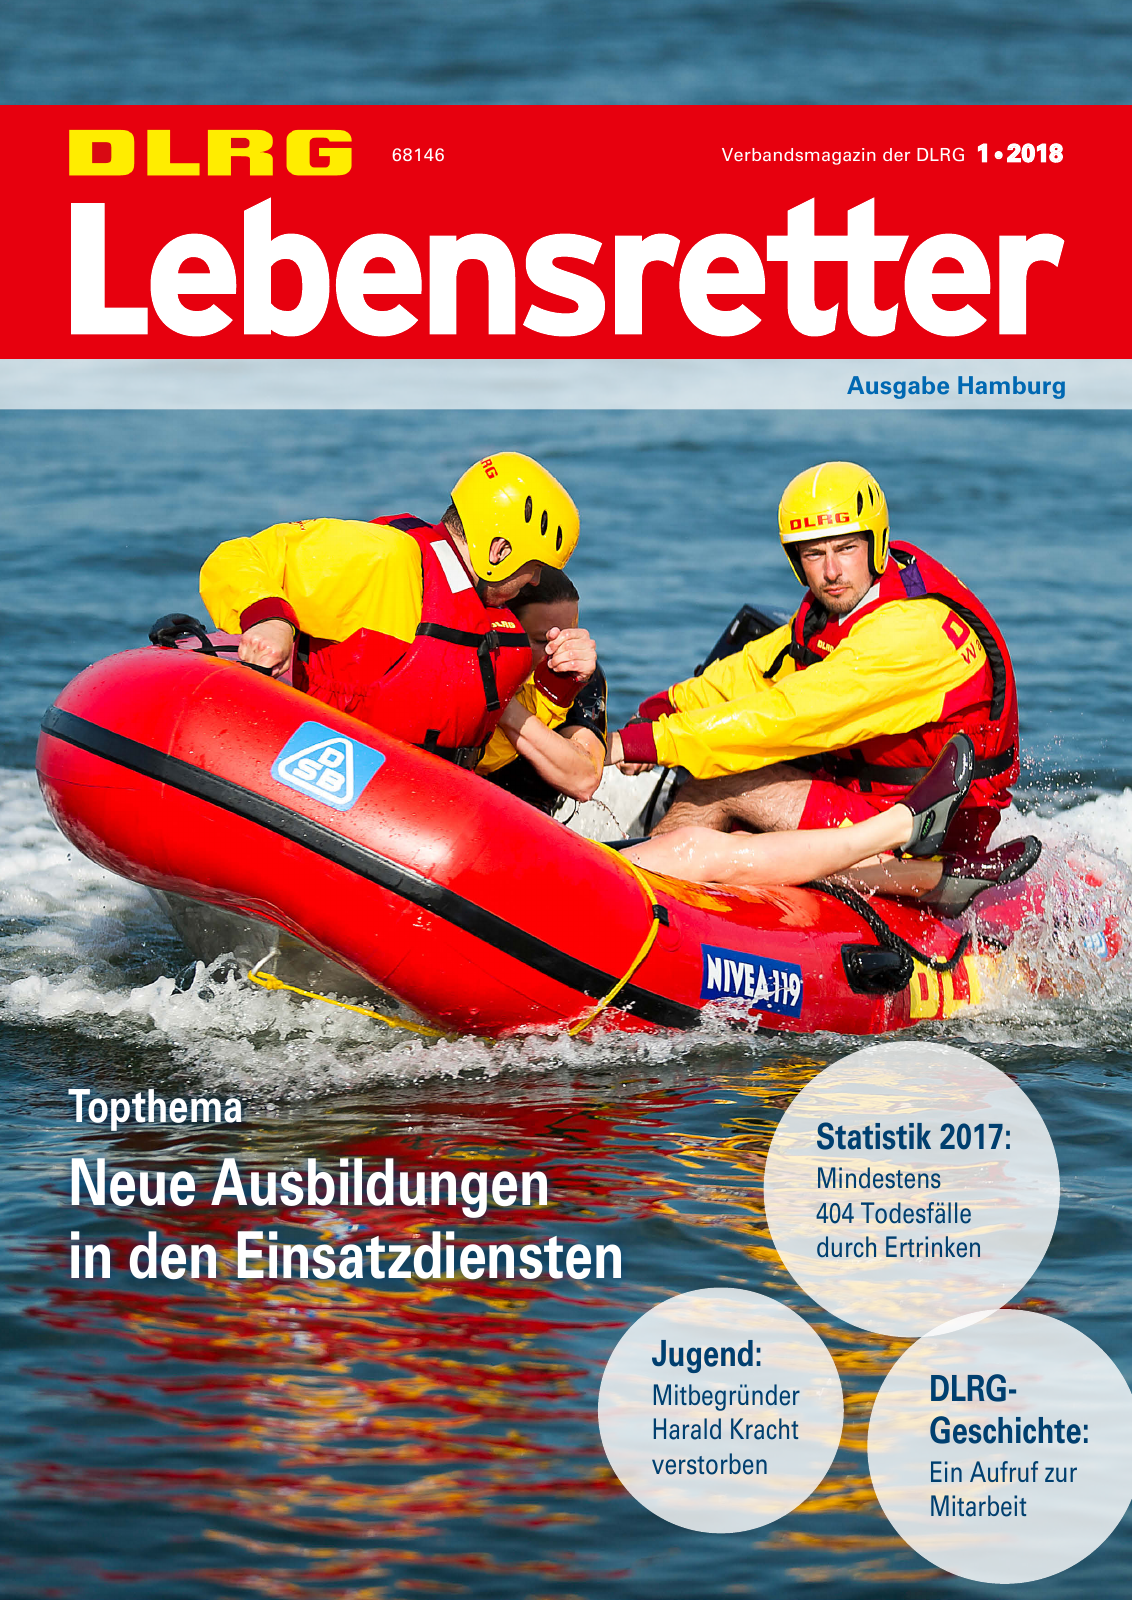 Vorschau Lebensretter 1/2018 - Regionalausgabe Hamburg Seite 1